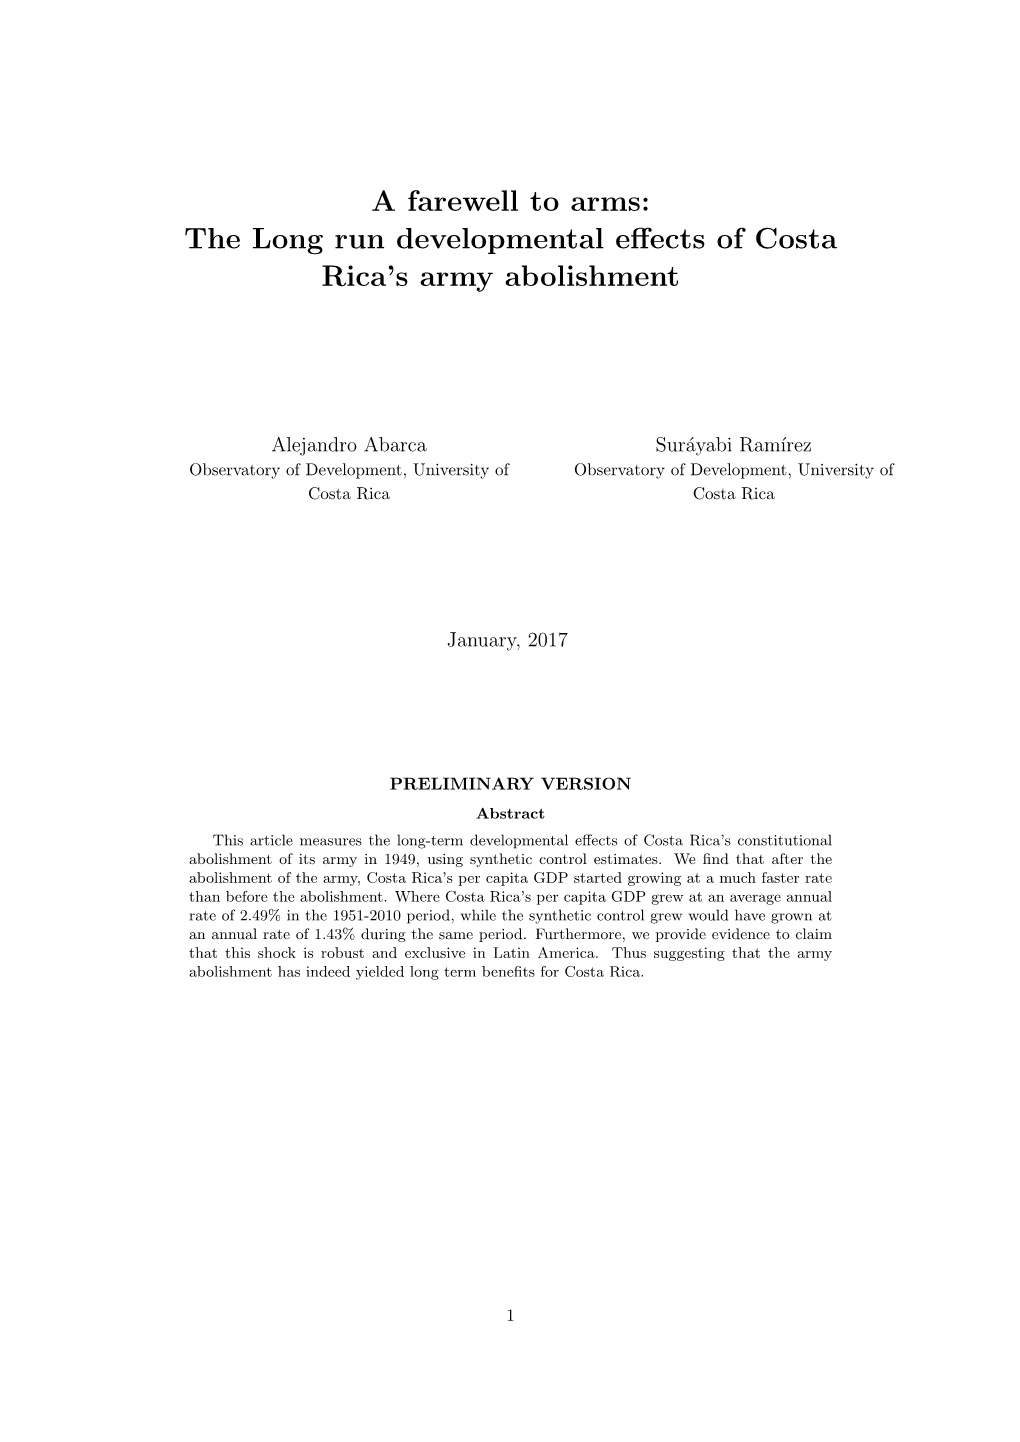 The Long Run Developmental Effects of Costa Rica's Army Abolishment